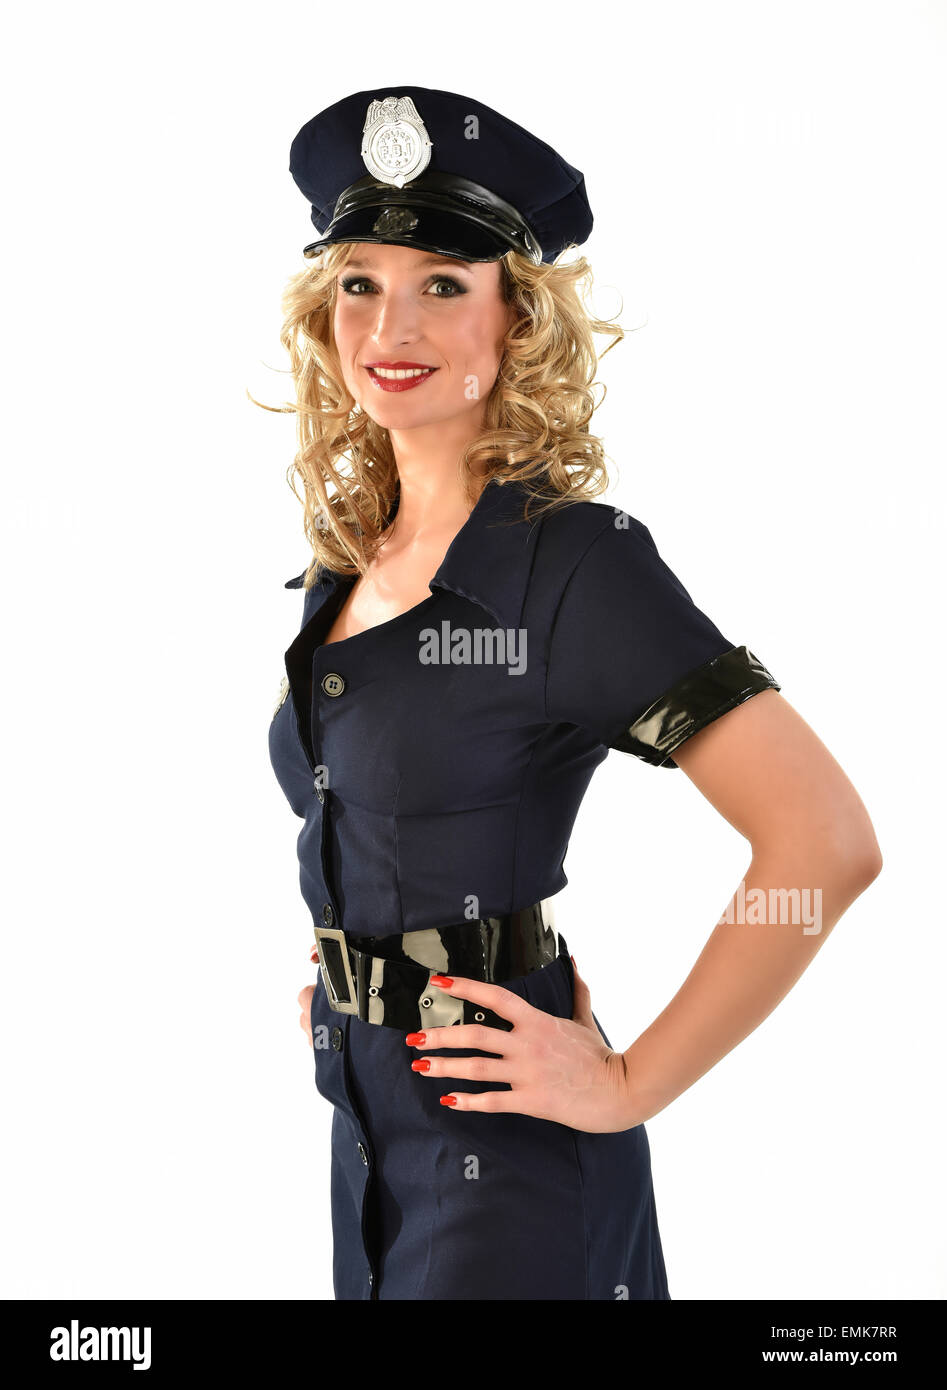 Policewoman Teen Costume 20